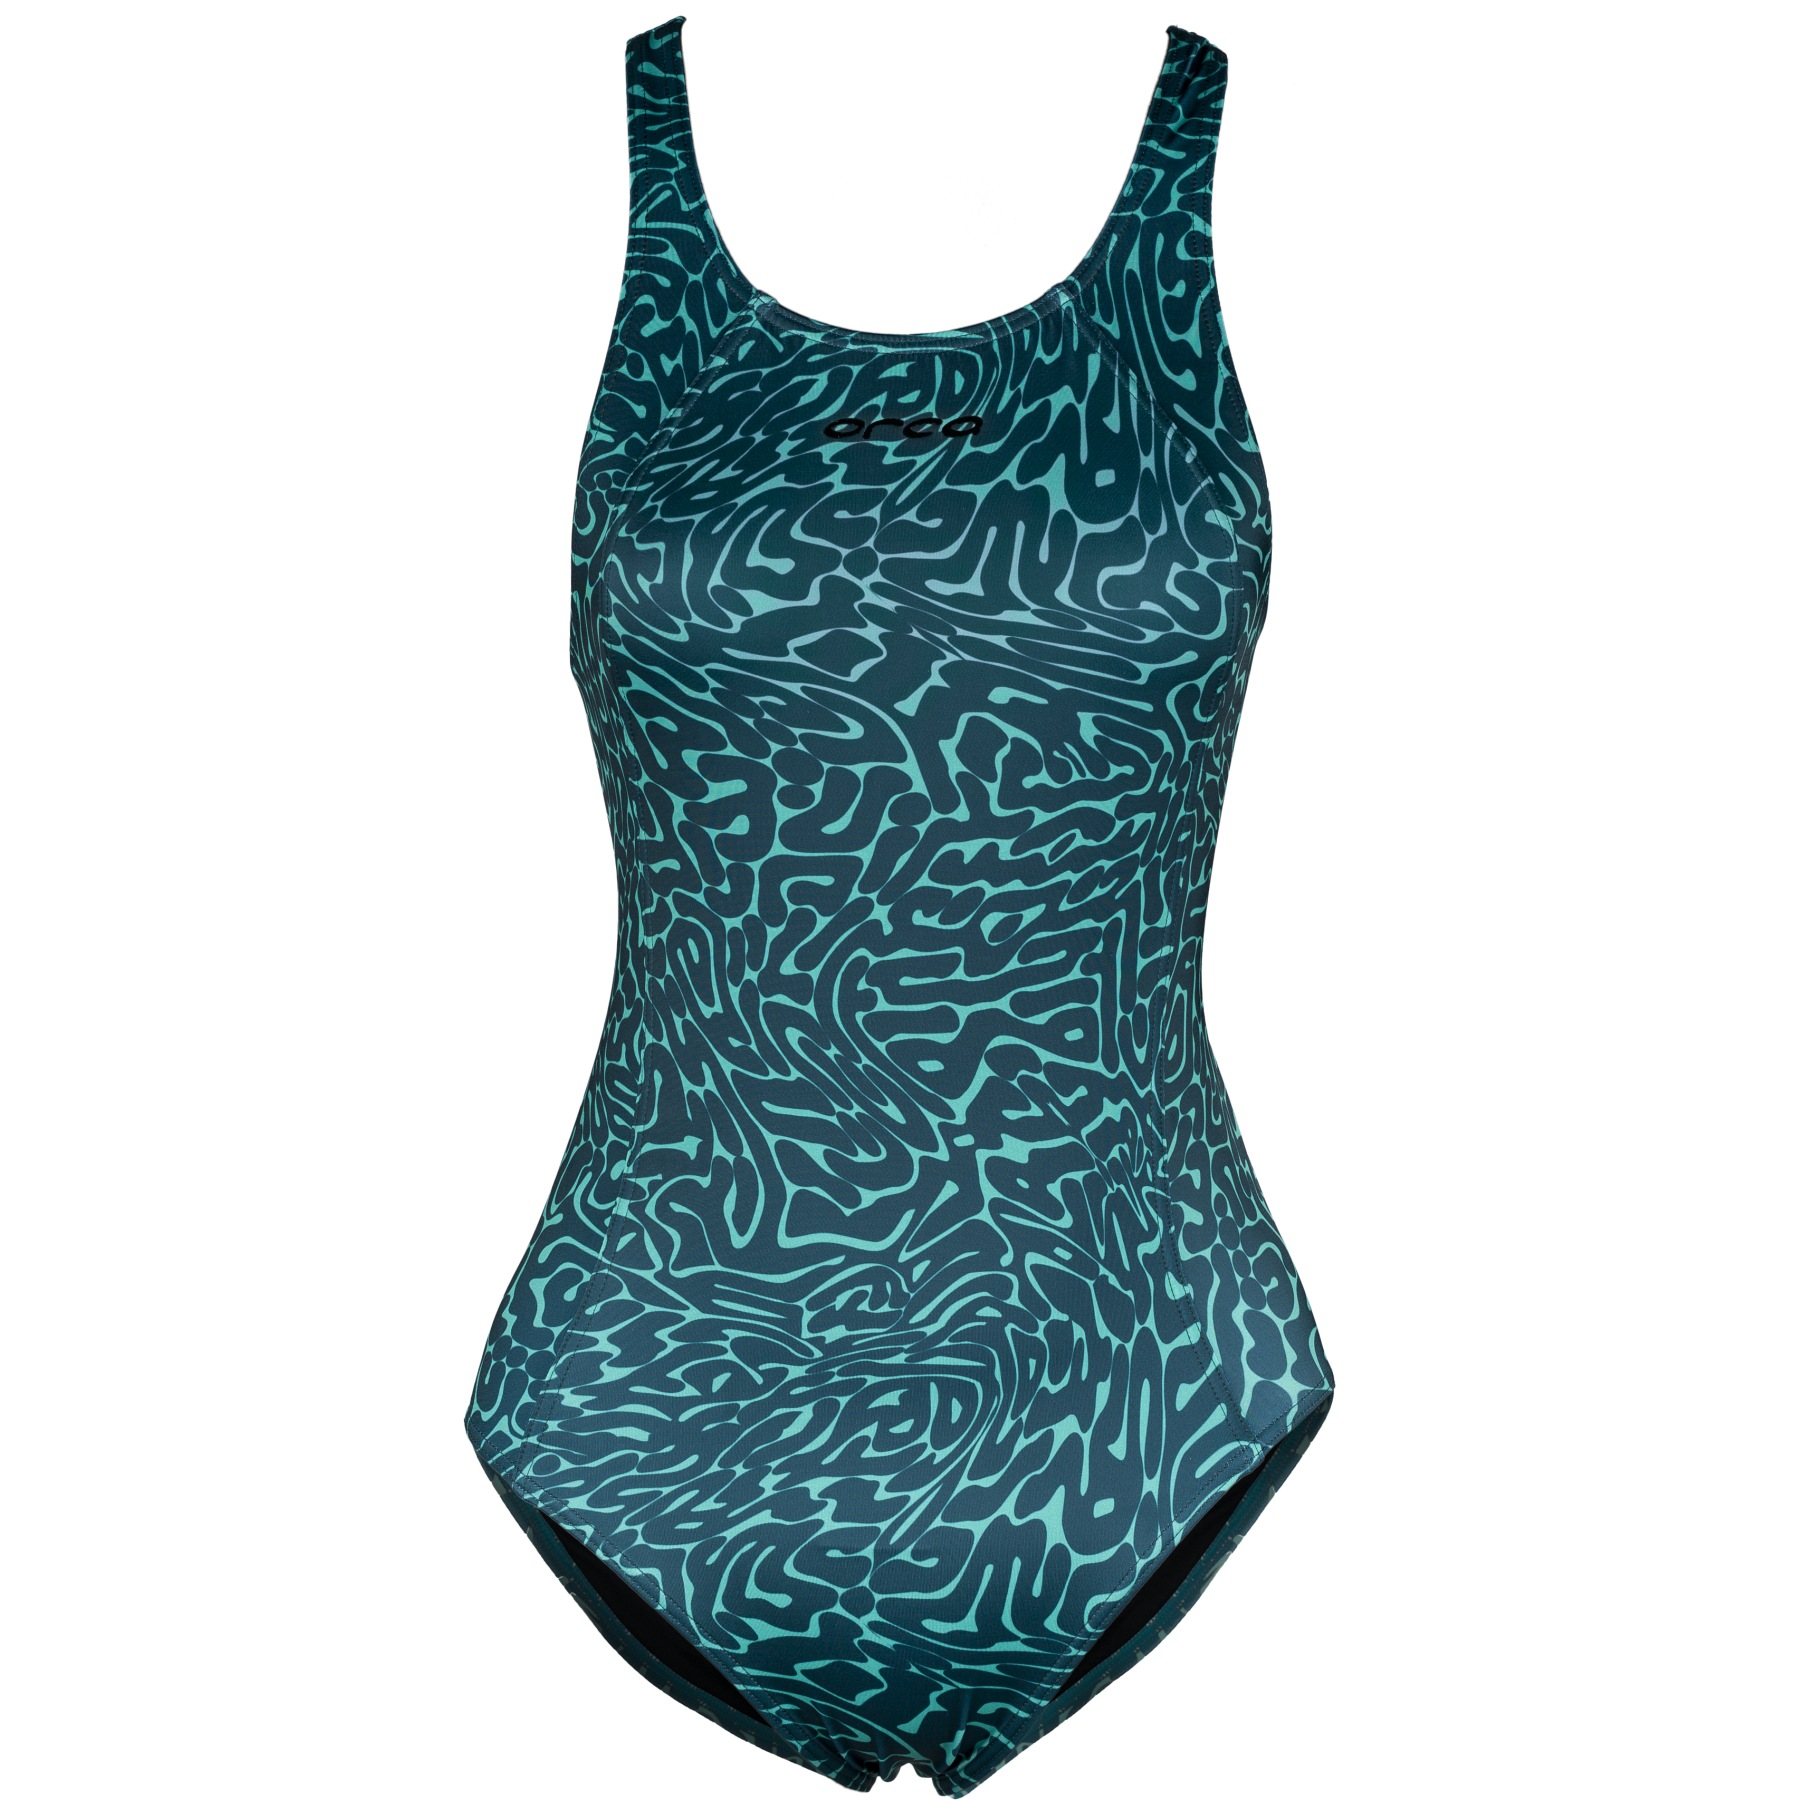 Produktbild von Orca Core Einteiler Badeanzug Damen - green diploria MS51